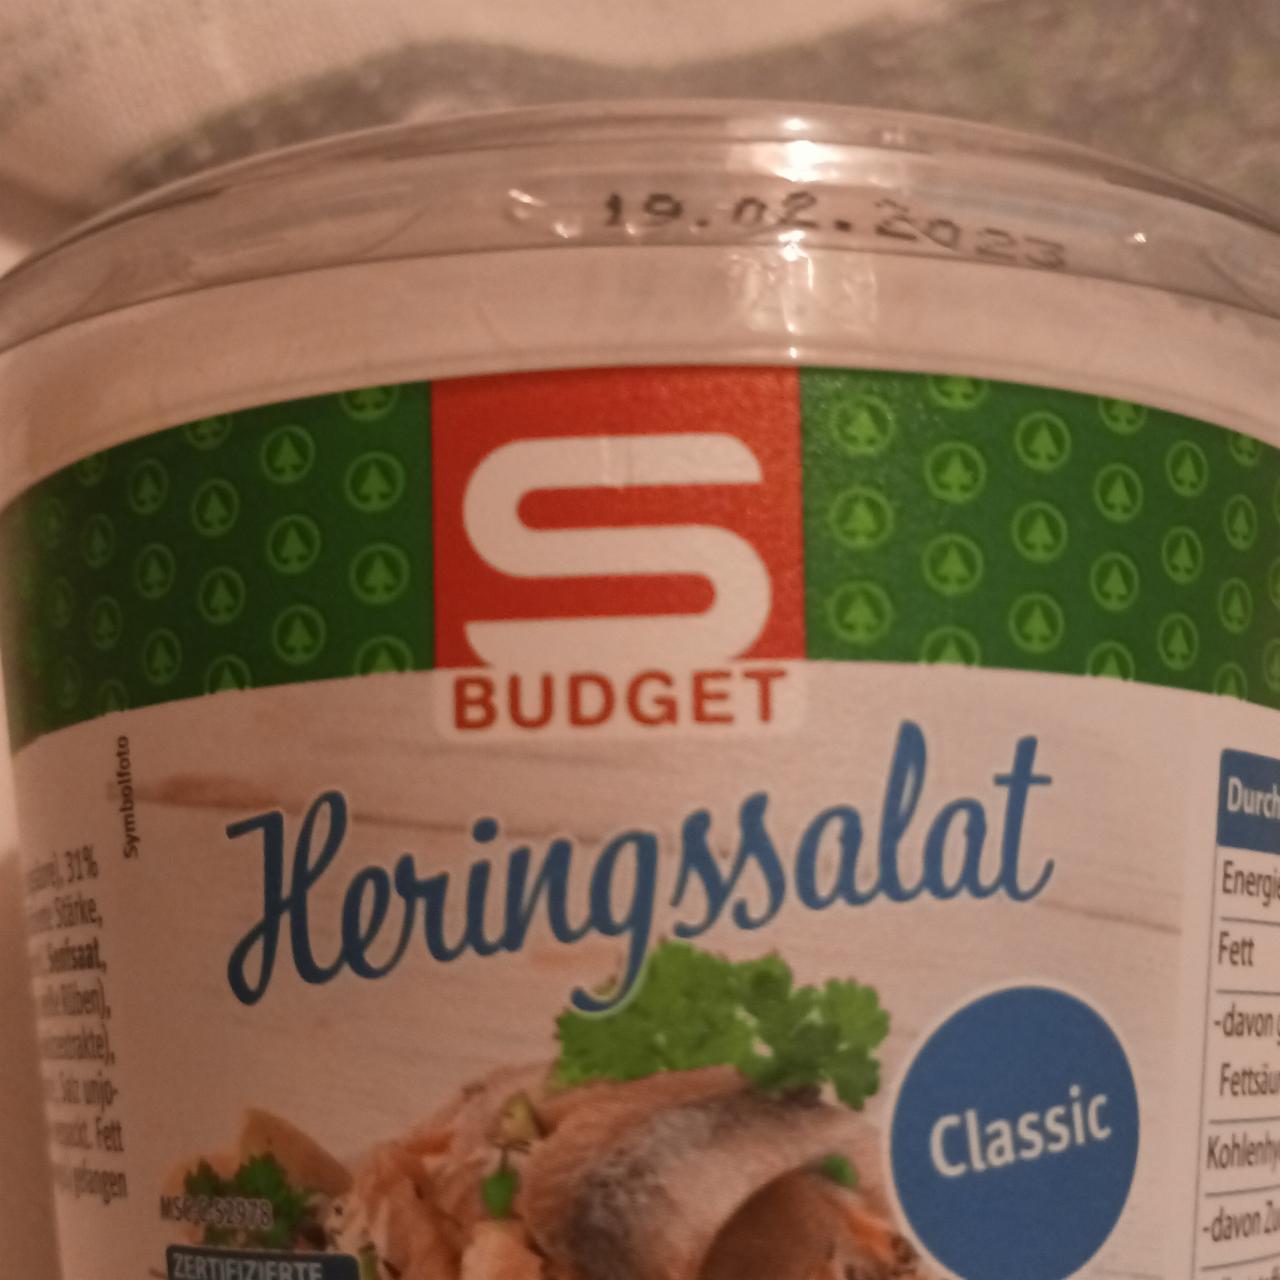 Fotografie - Heringssalat Classic S Budget